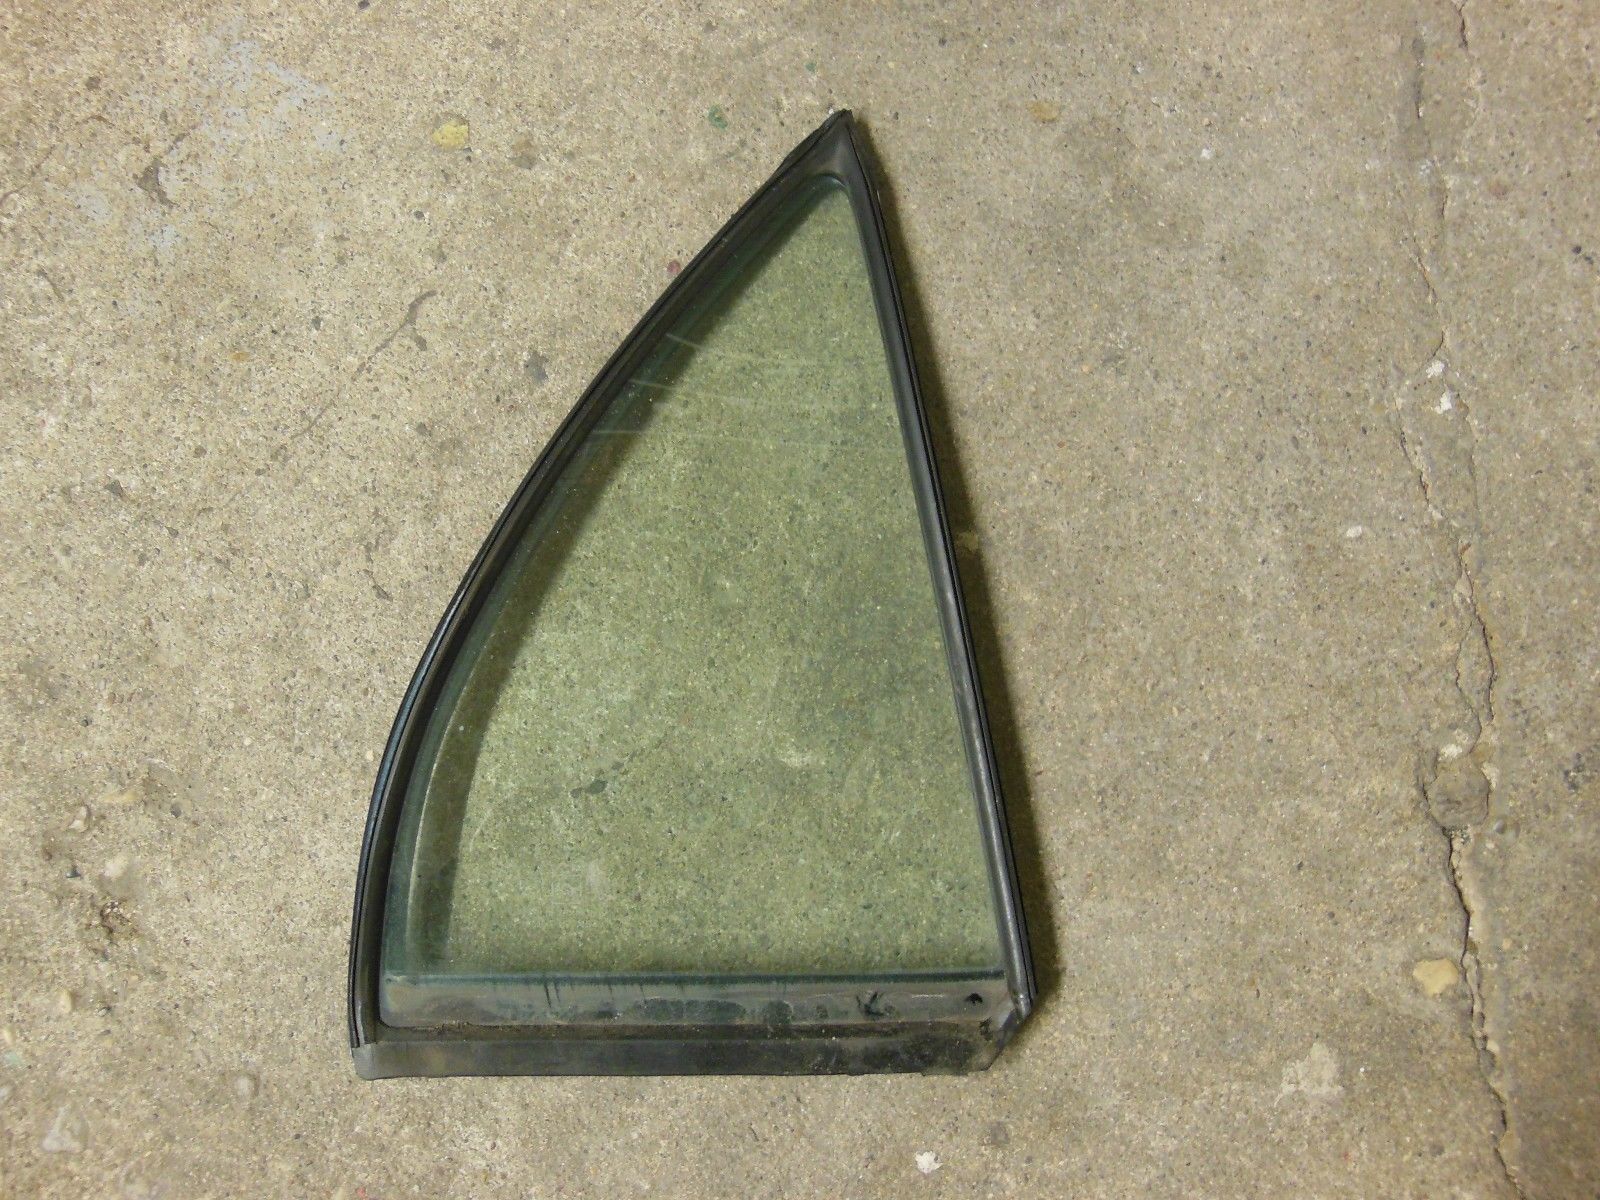 Primary image for 1998-2002 TOYOTA COROLLA REAR DOOR CORNER VENT GLASS WINDOW FITS PASSENGER SIDE